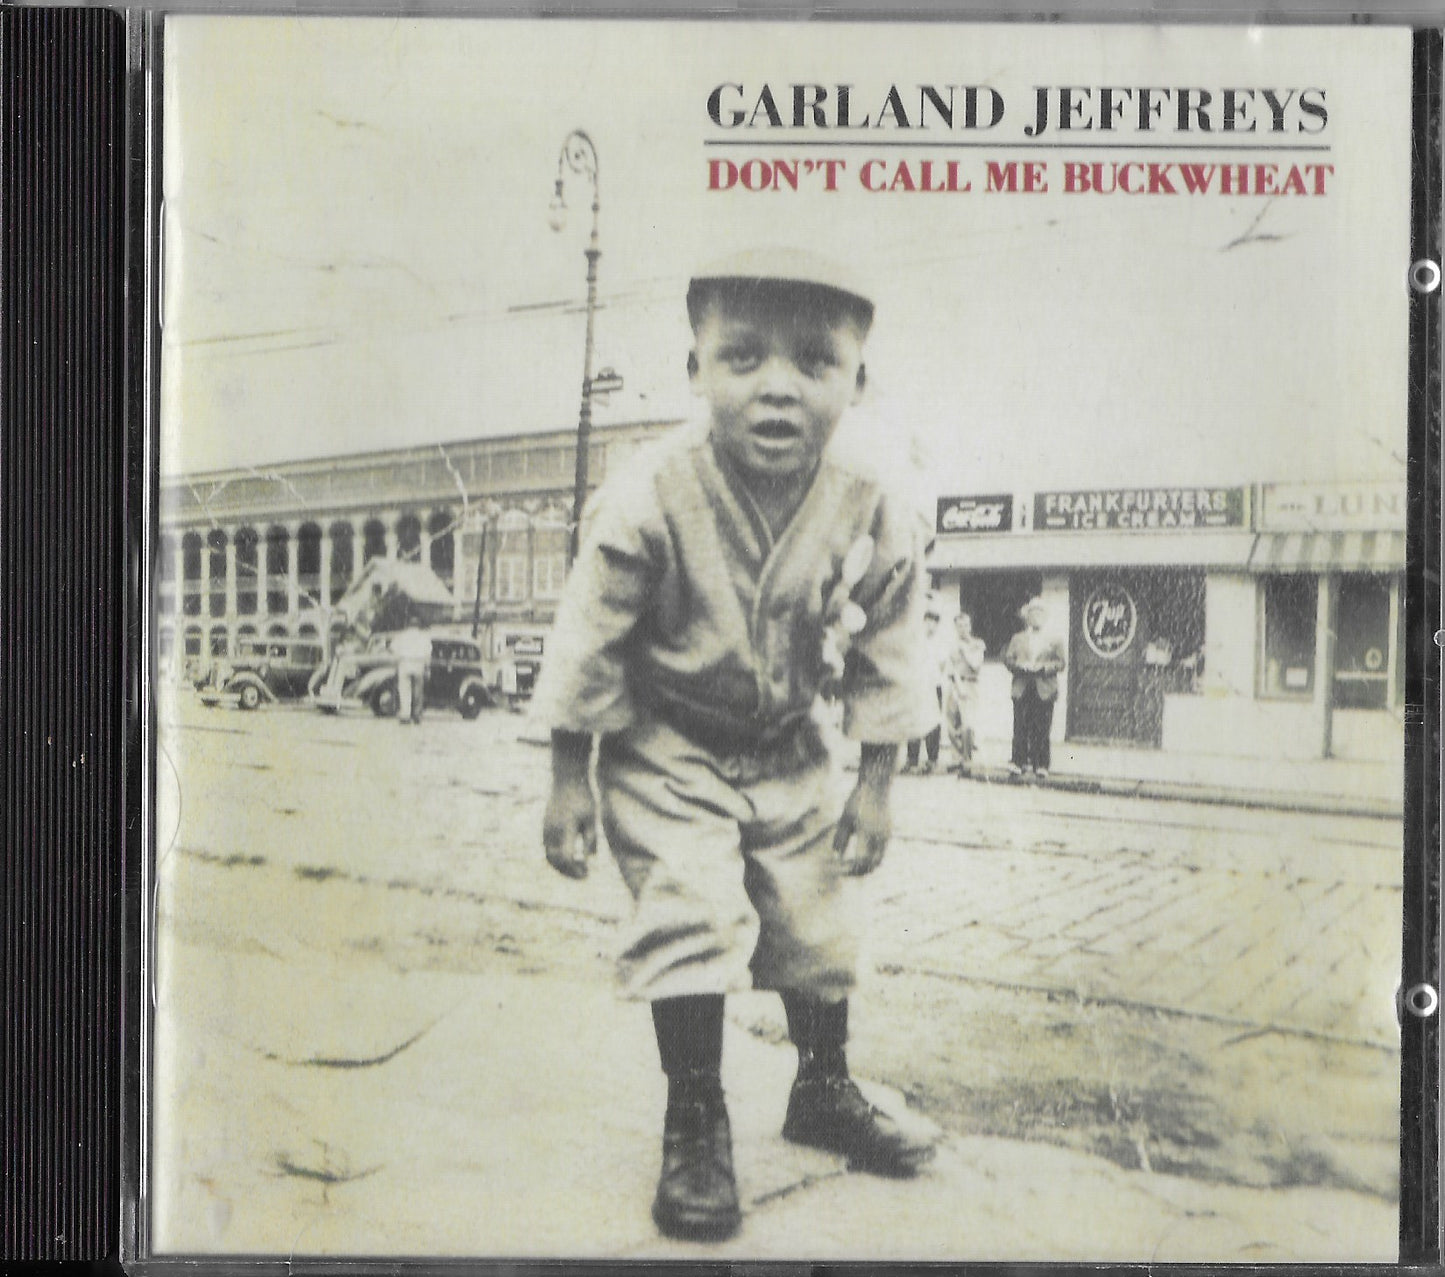 GARLAND JEFFREYS - Don't Call Me Buckwheat